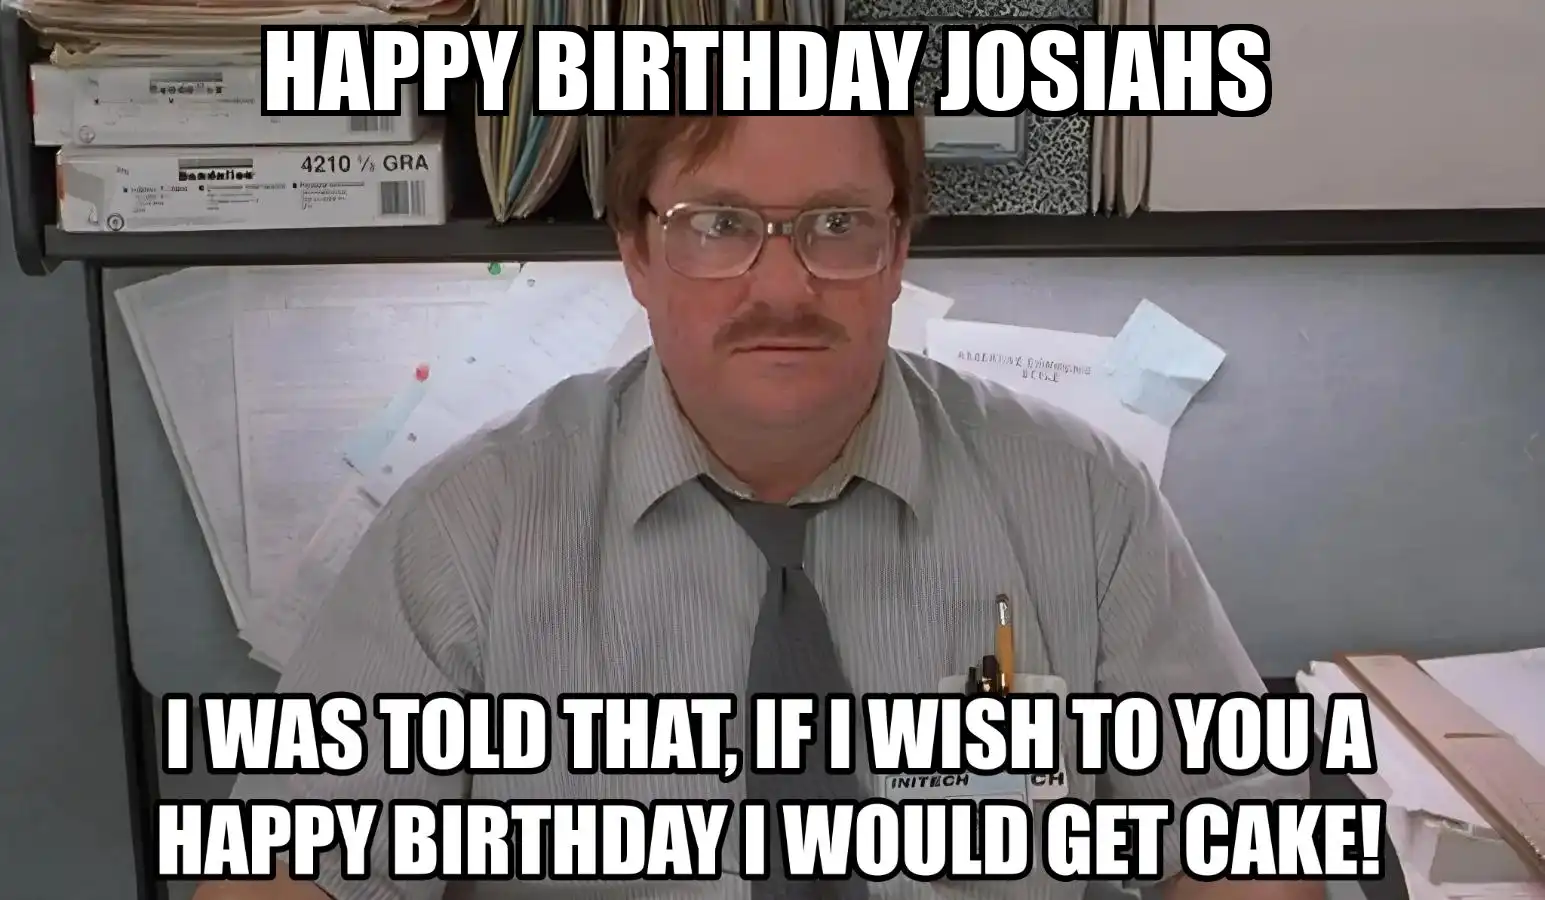 Happy Birthday Josiahs I Would Get A Cake Meme